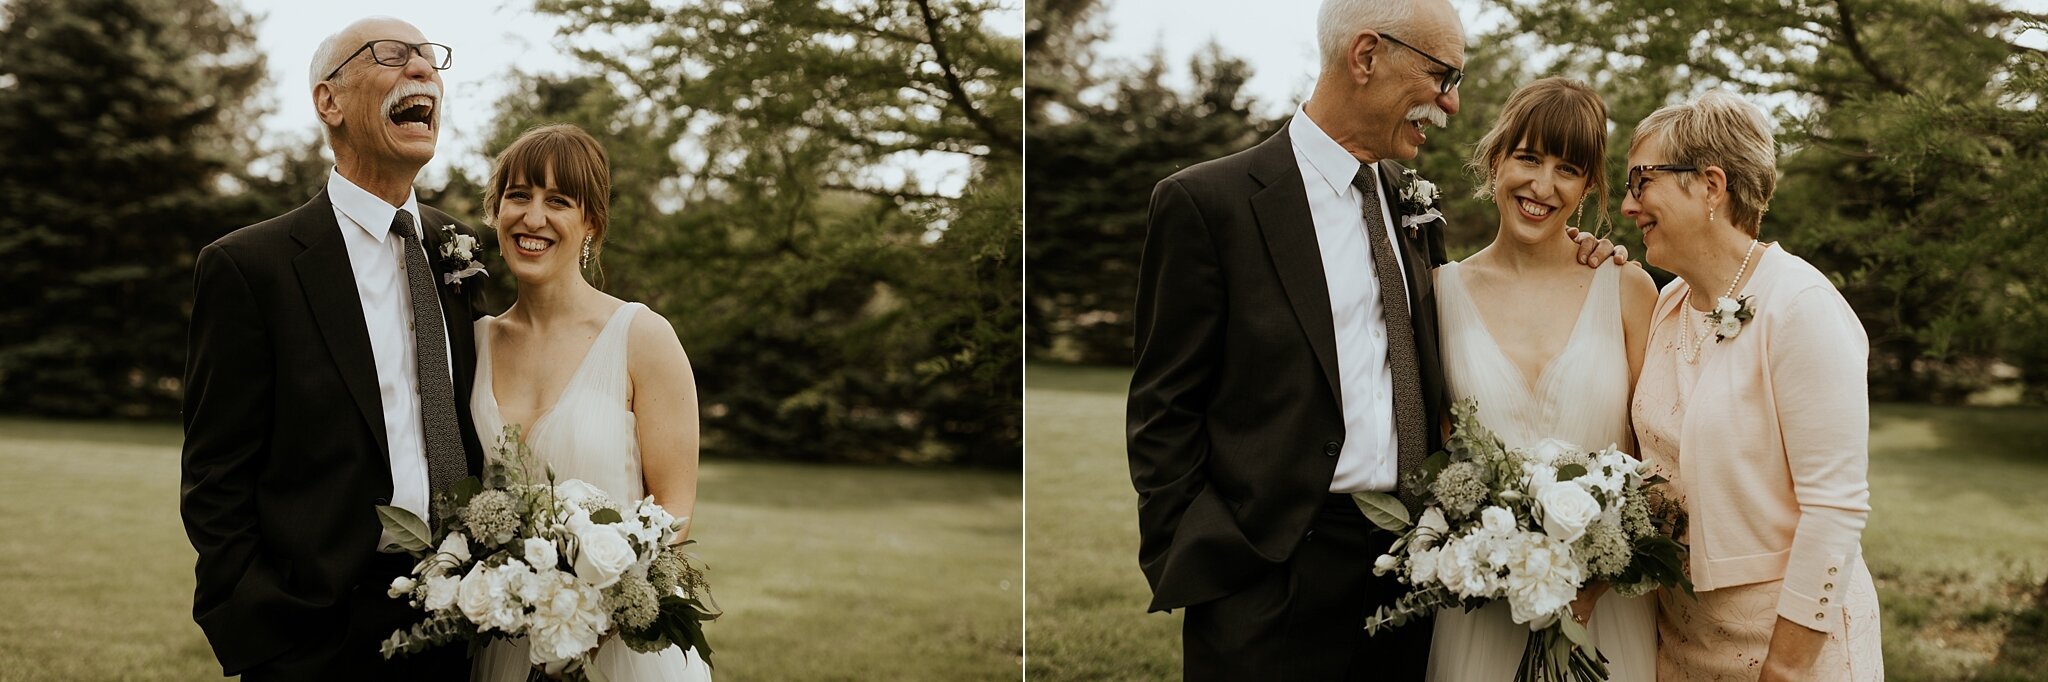 Lincoln Nebraska Backyard Wedding - Trin Jensen Photography - Nebraska Wedding Photographer_0038.jpg